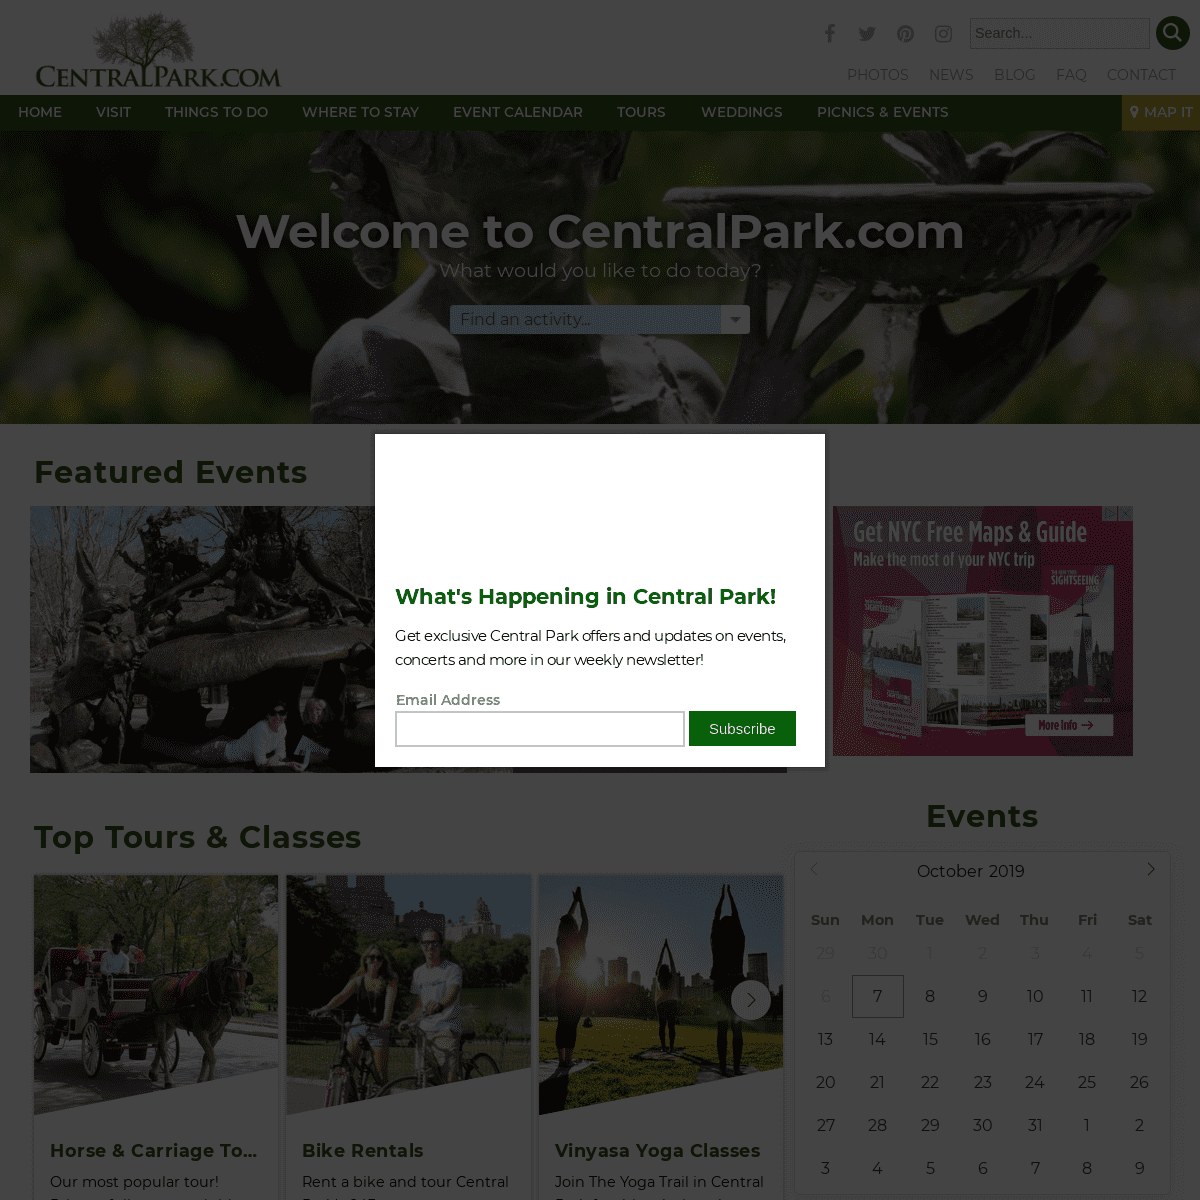 A complete backup of centralpark.com